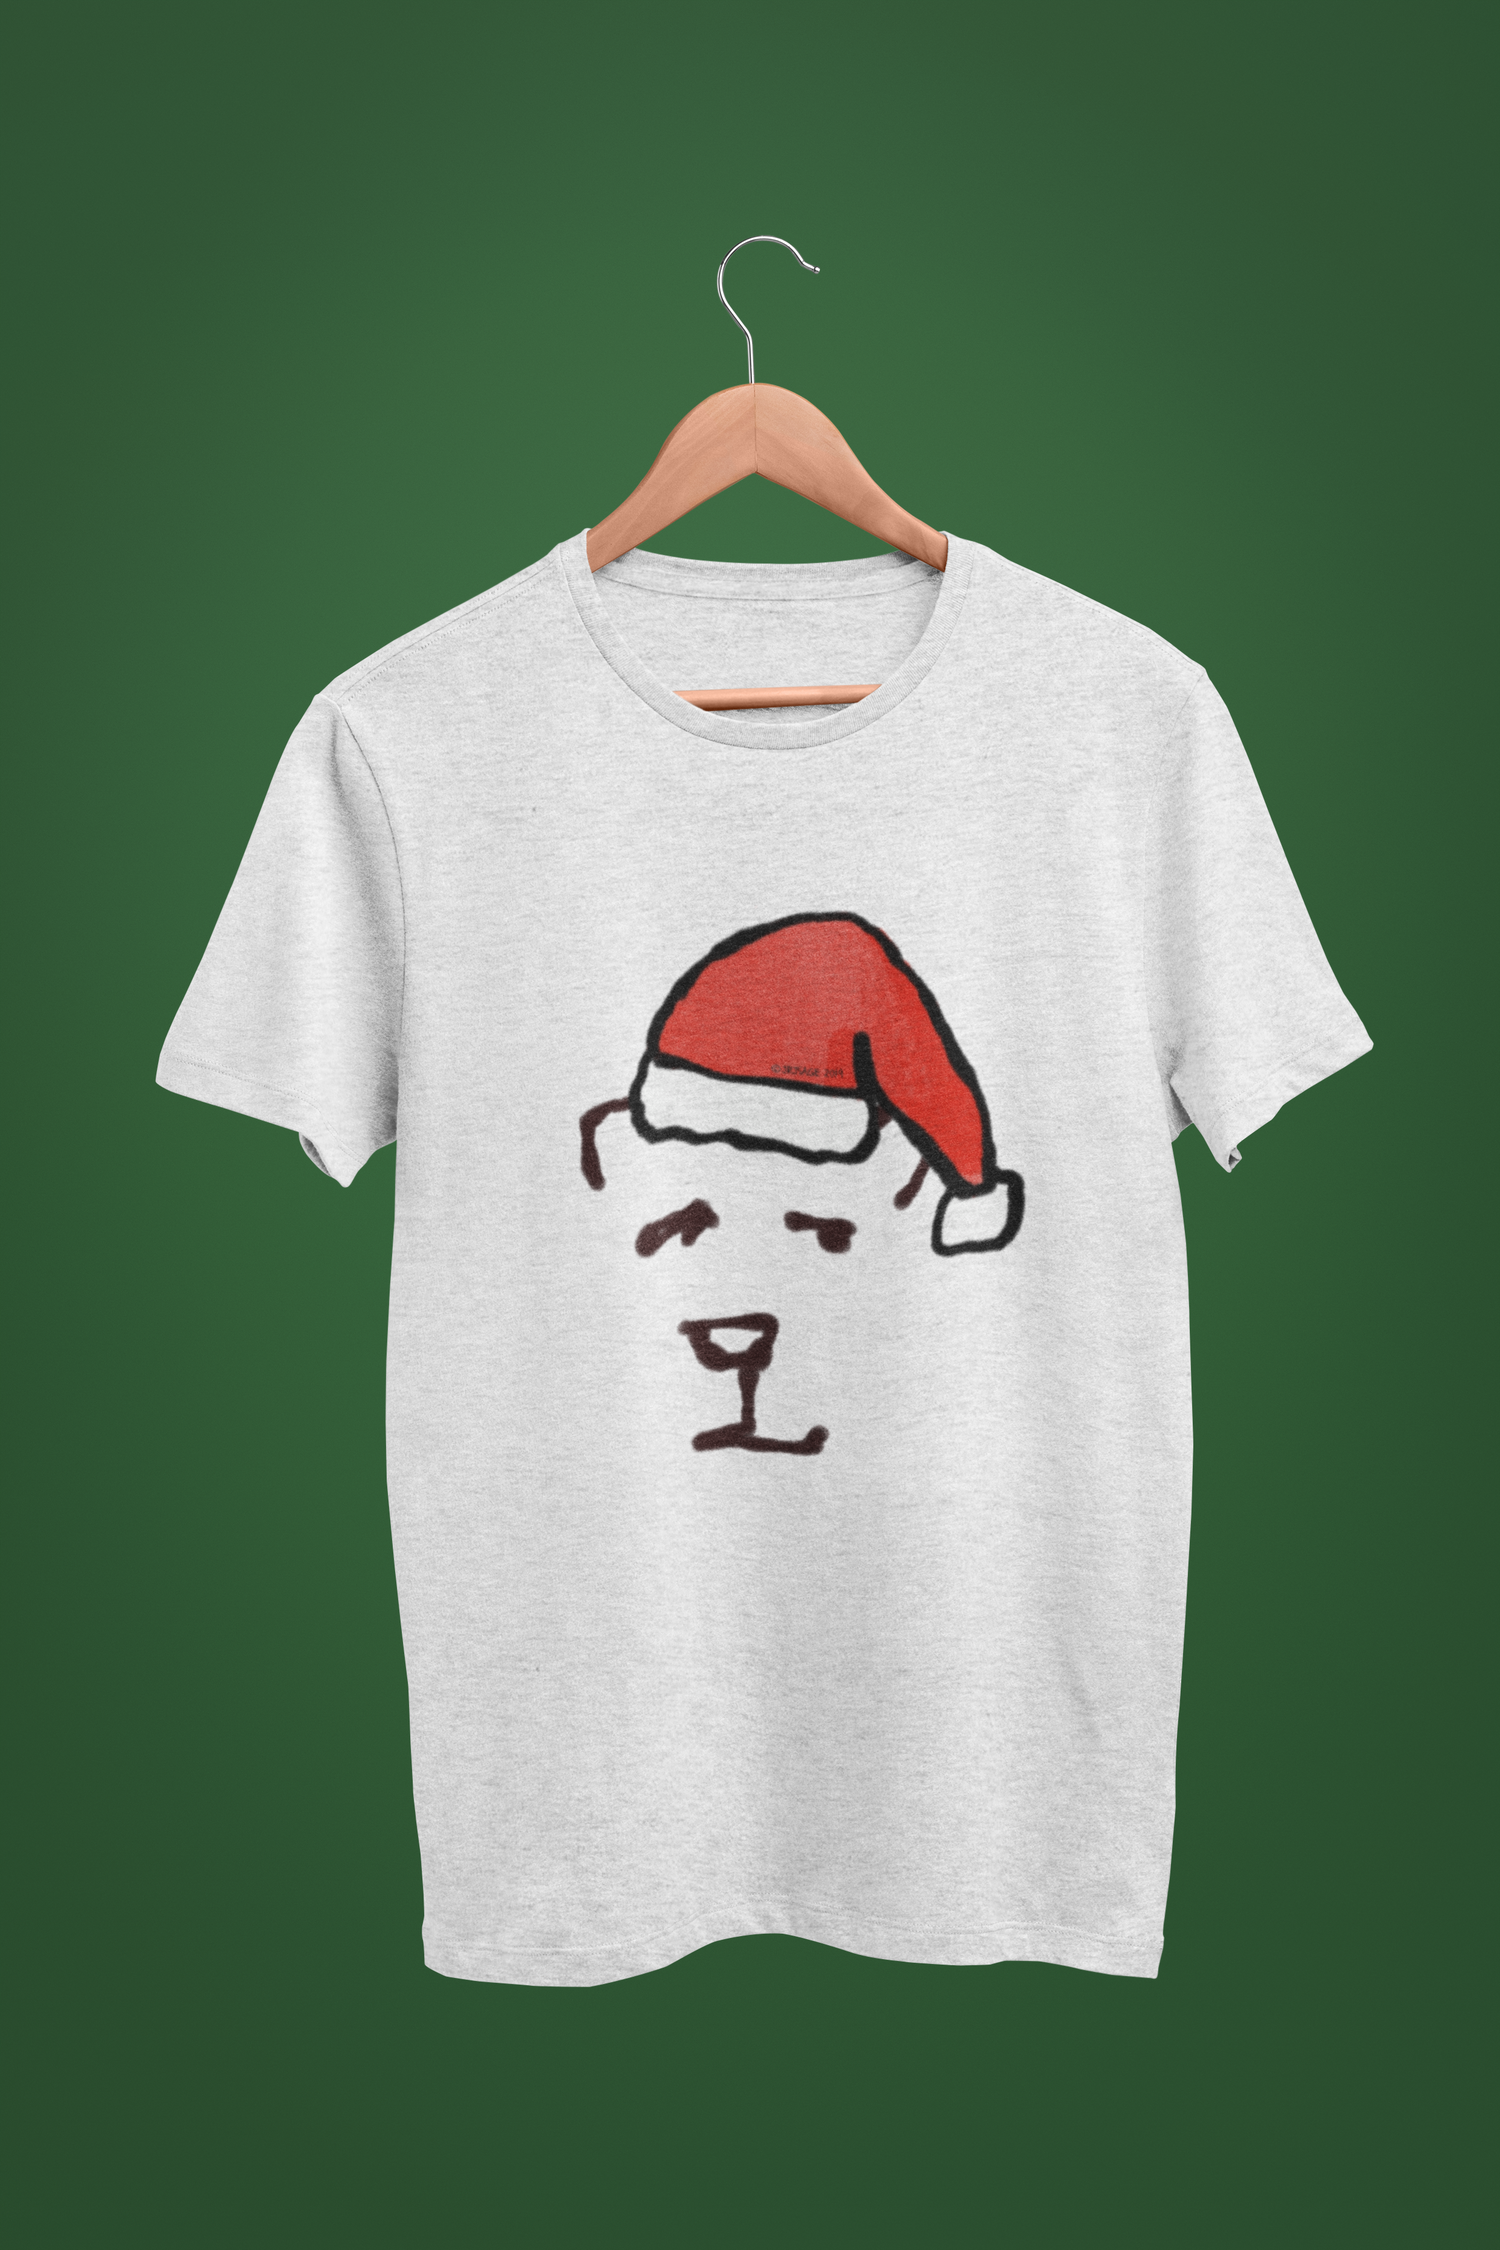 Santa Polar Bear cute Christmas T-shirt illustrated design by Hector and Bone on a Vegan Heather grey tee shirt